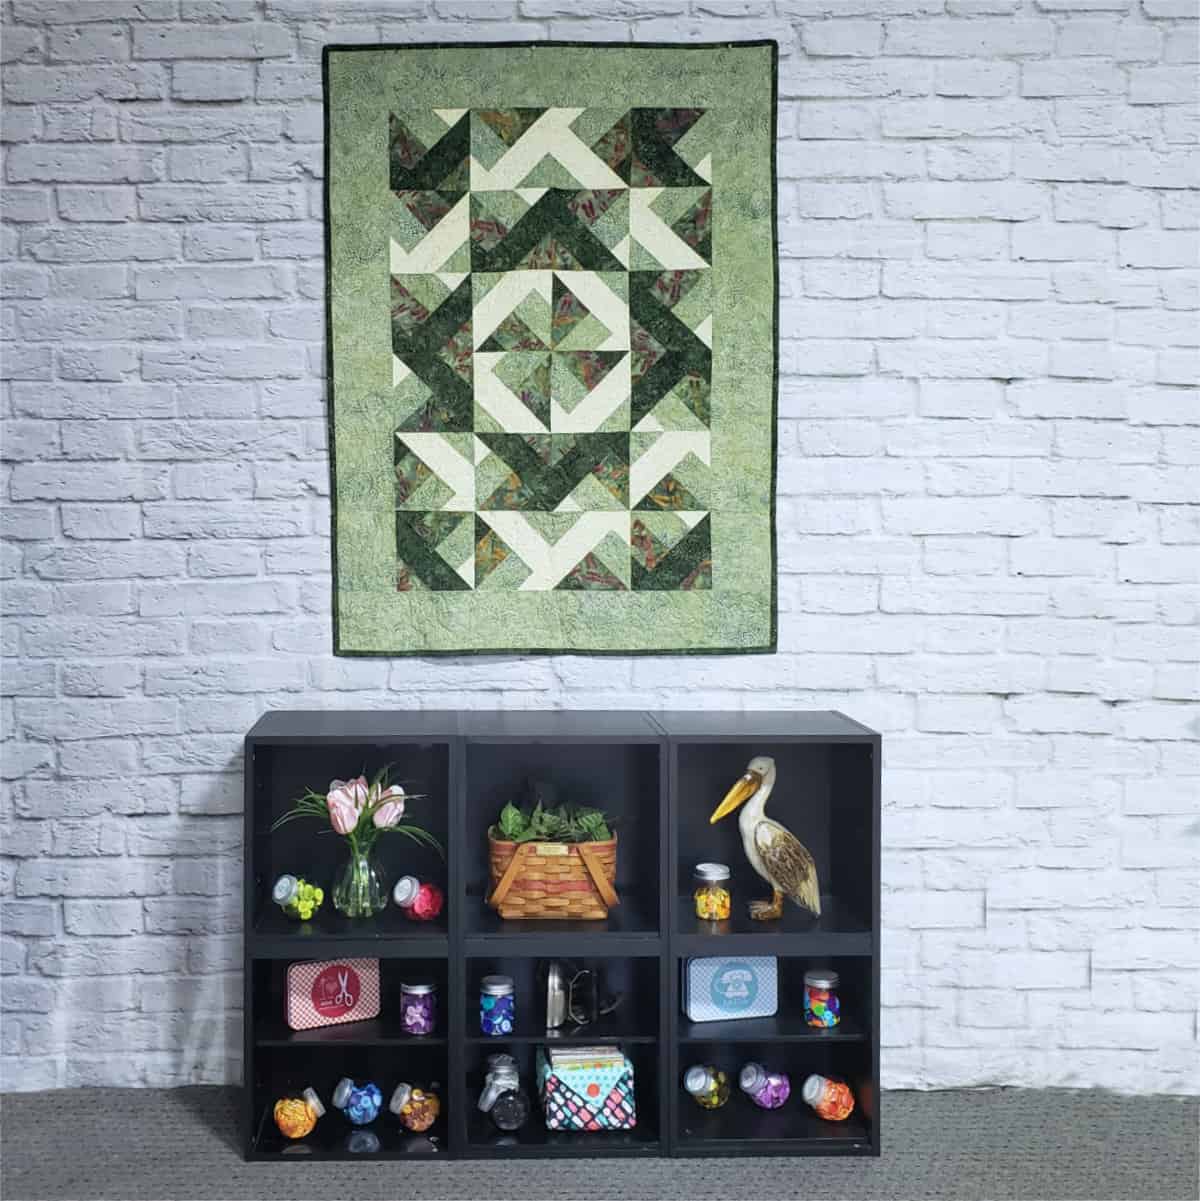 Green batik diagonal quilt on wall with display